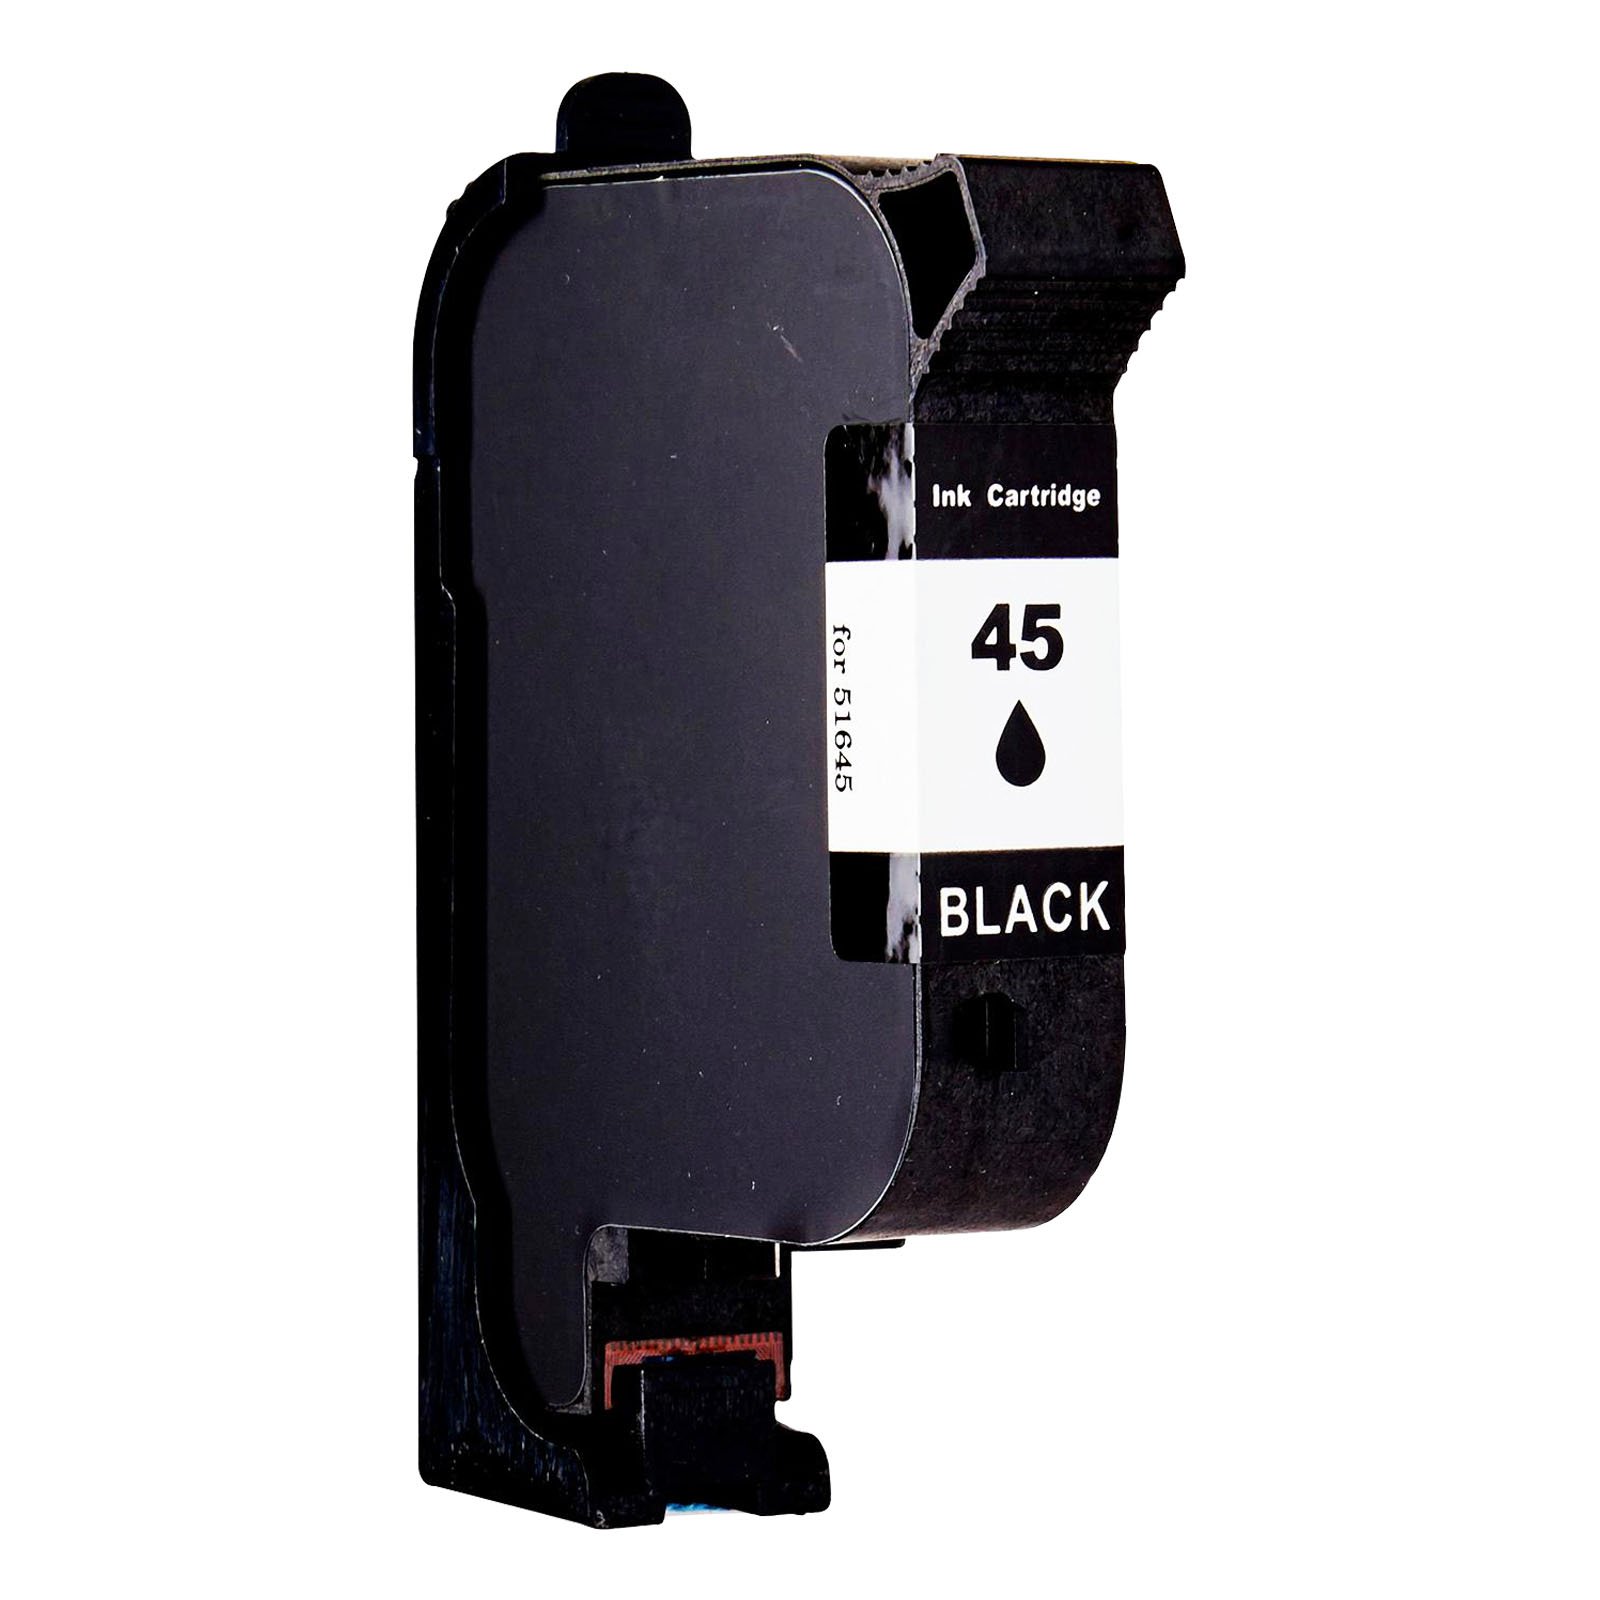 Ink Cartridge Compatible HP 45 (51645) Black